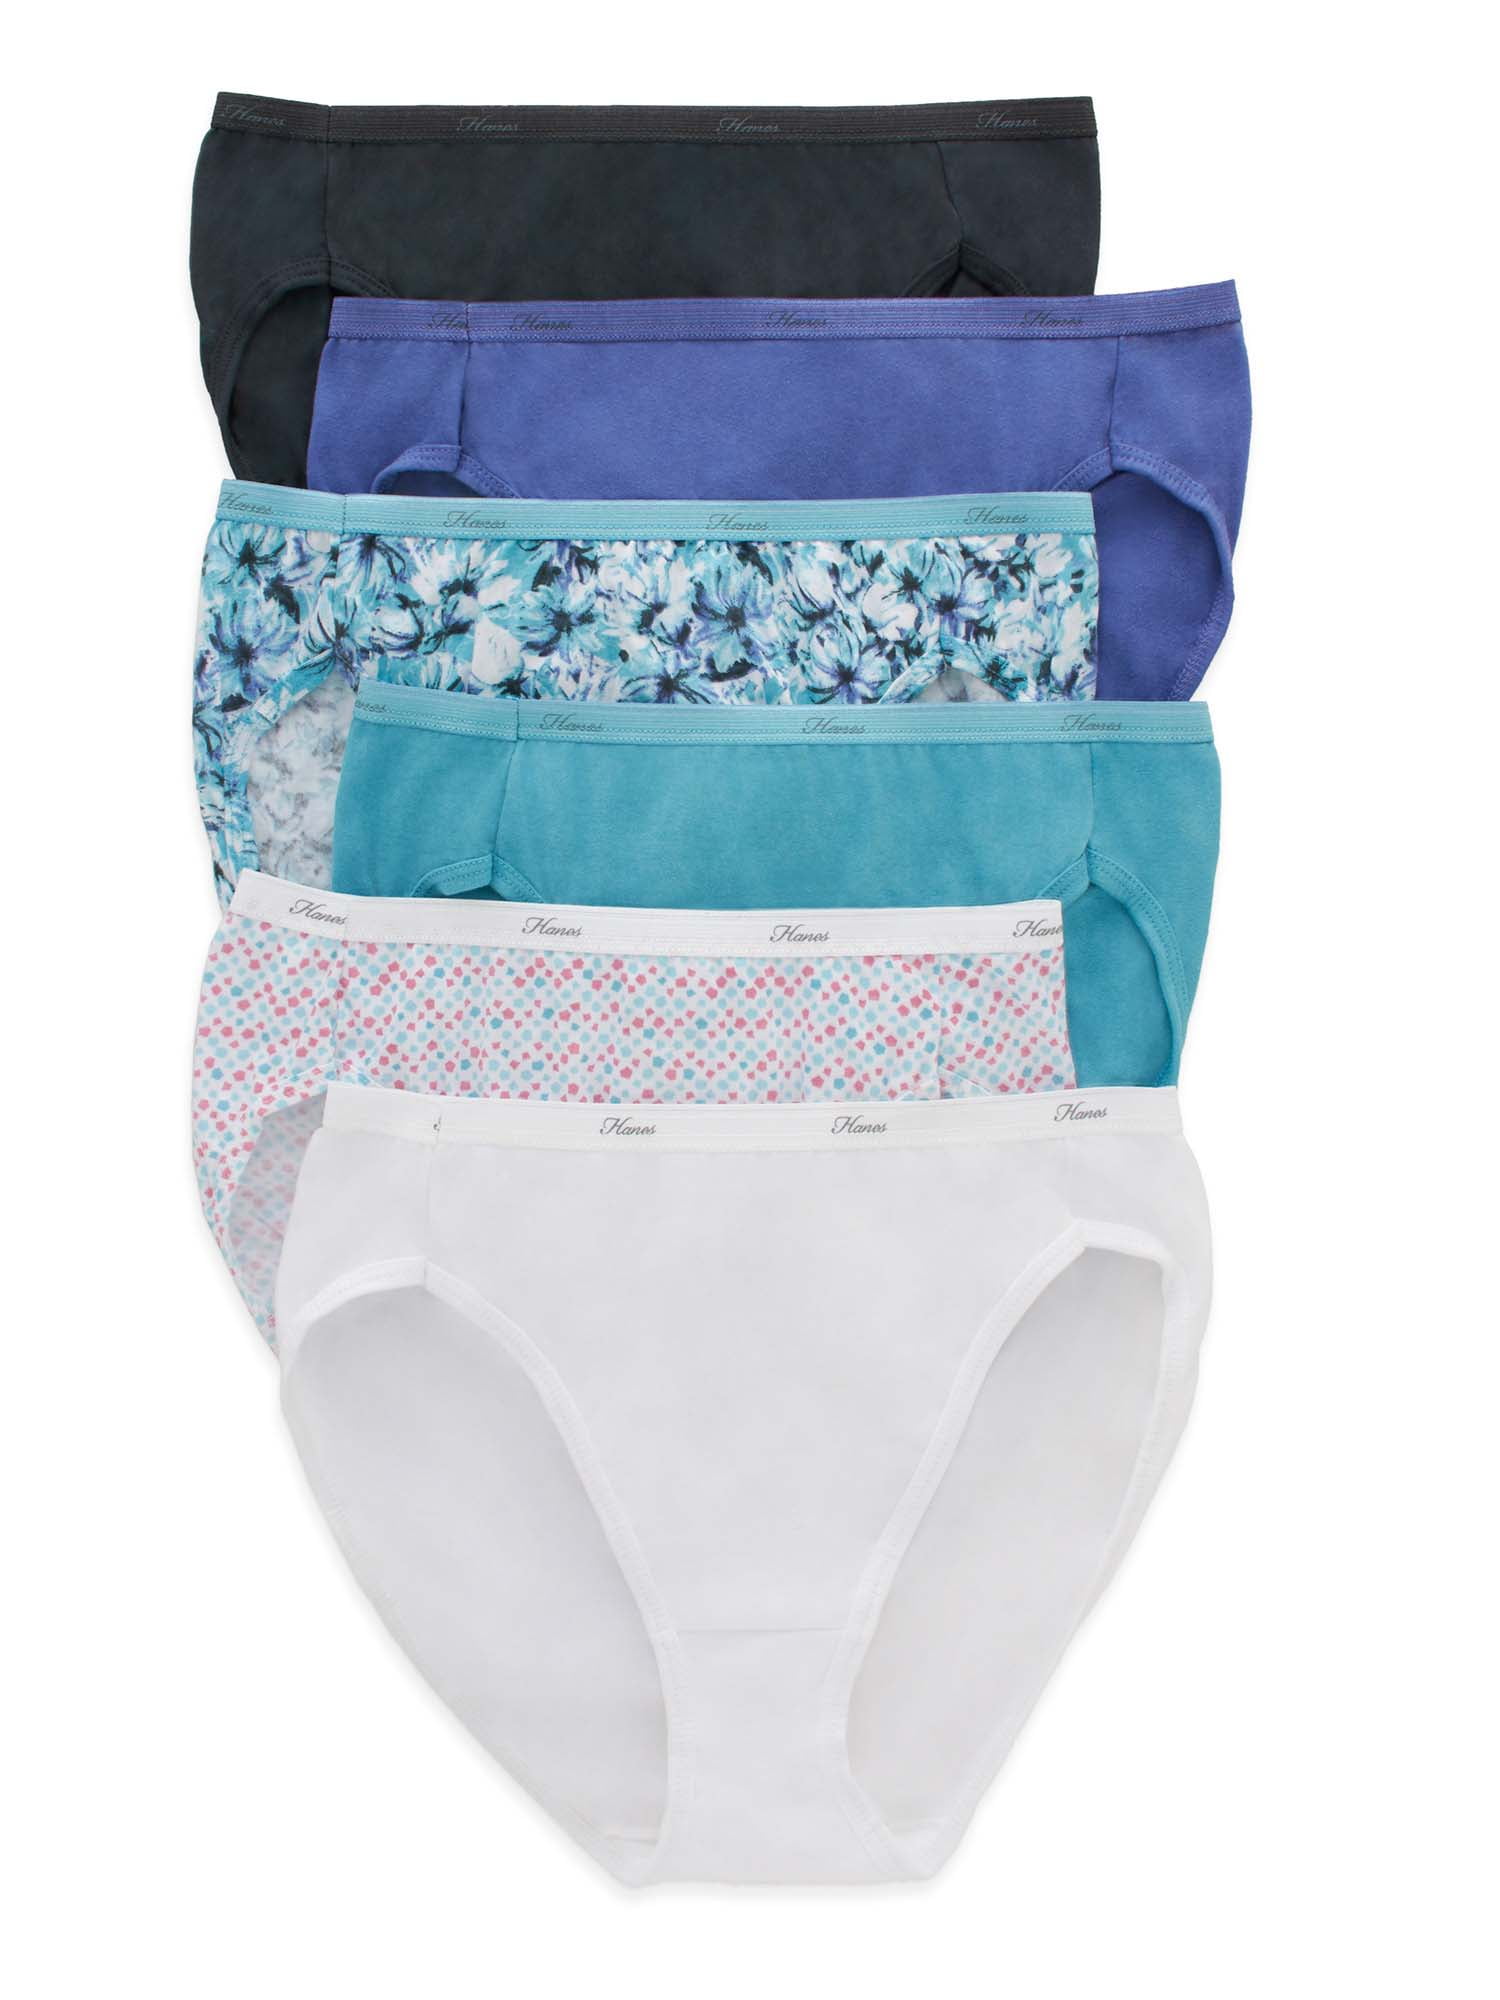 🌸4/$20🌸 Hanes Value Pack 10 Hi-Cuts Women’s Underwear Size 9/2XL NWT